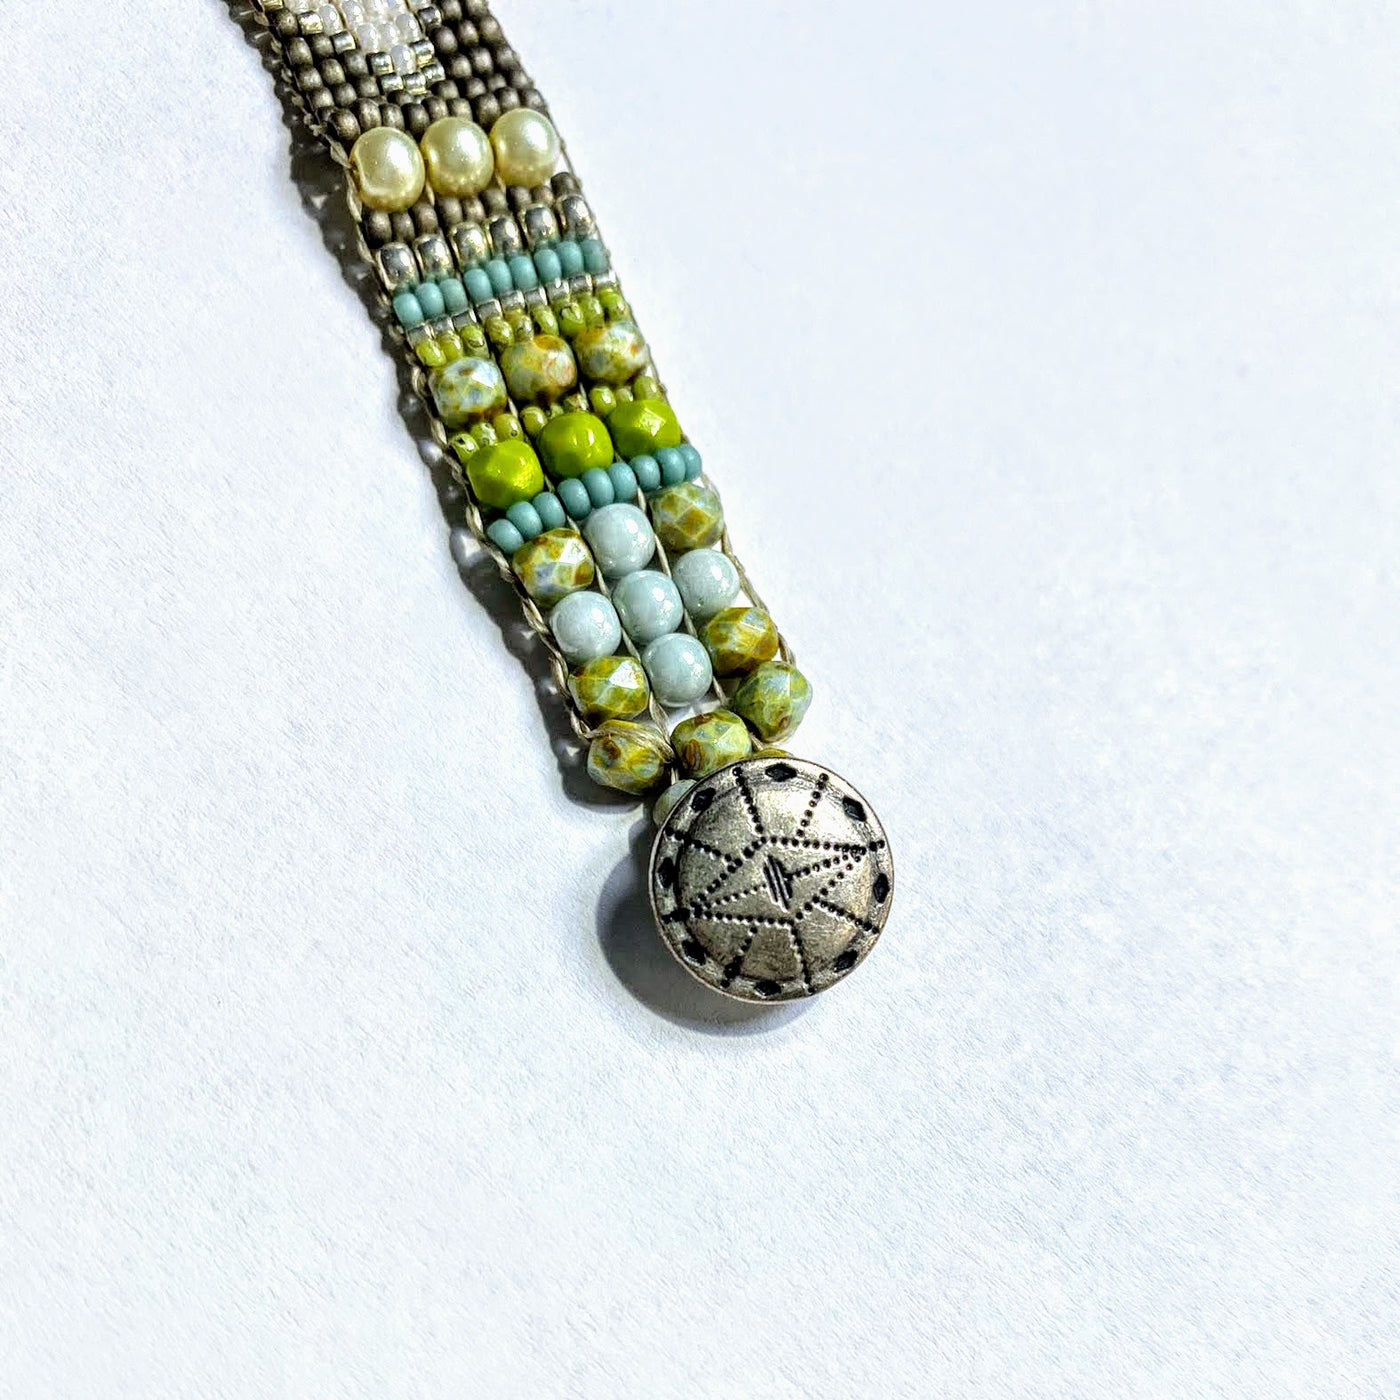 JEM-019 Green/Olive Beaded Bracelet